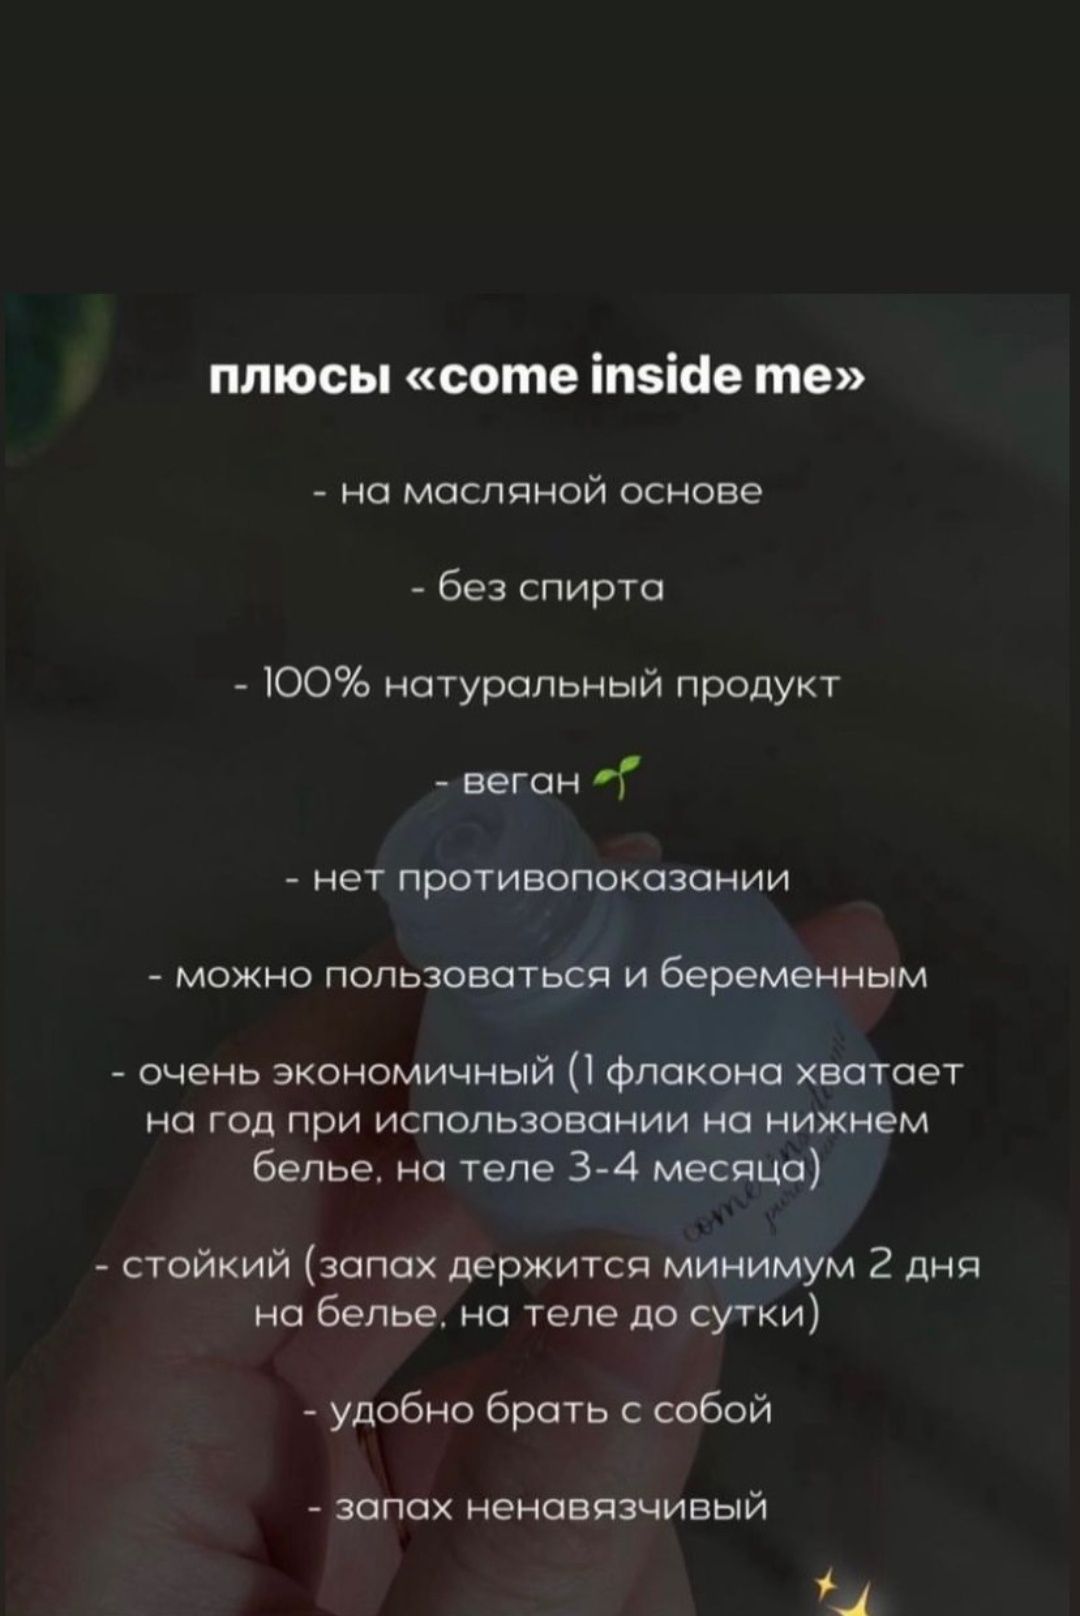 Come inside me Парфюм